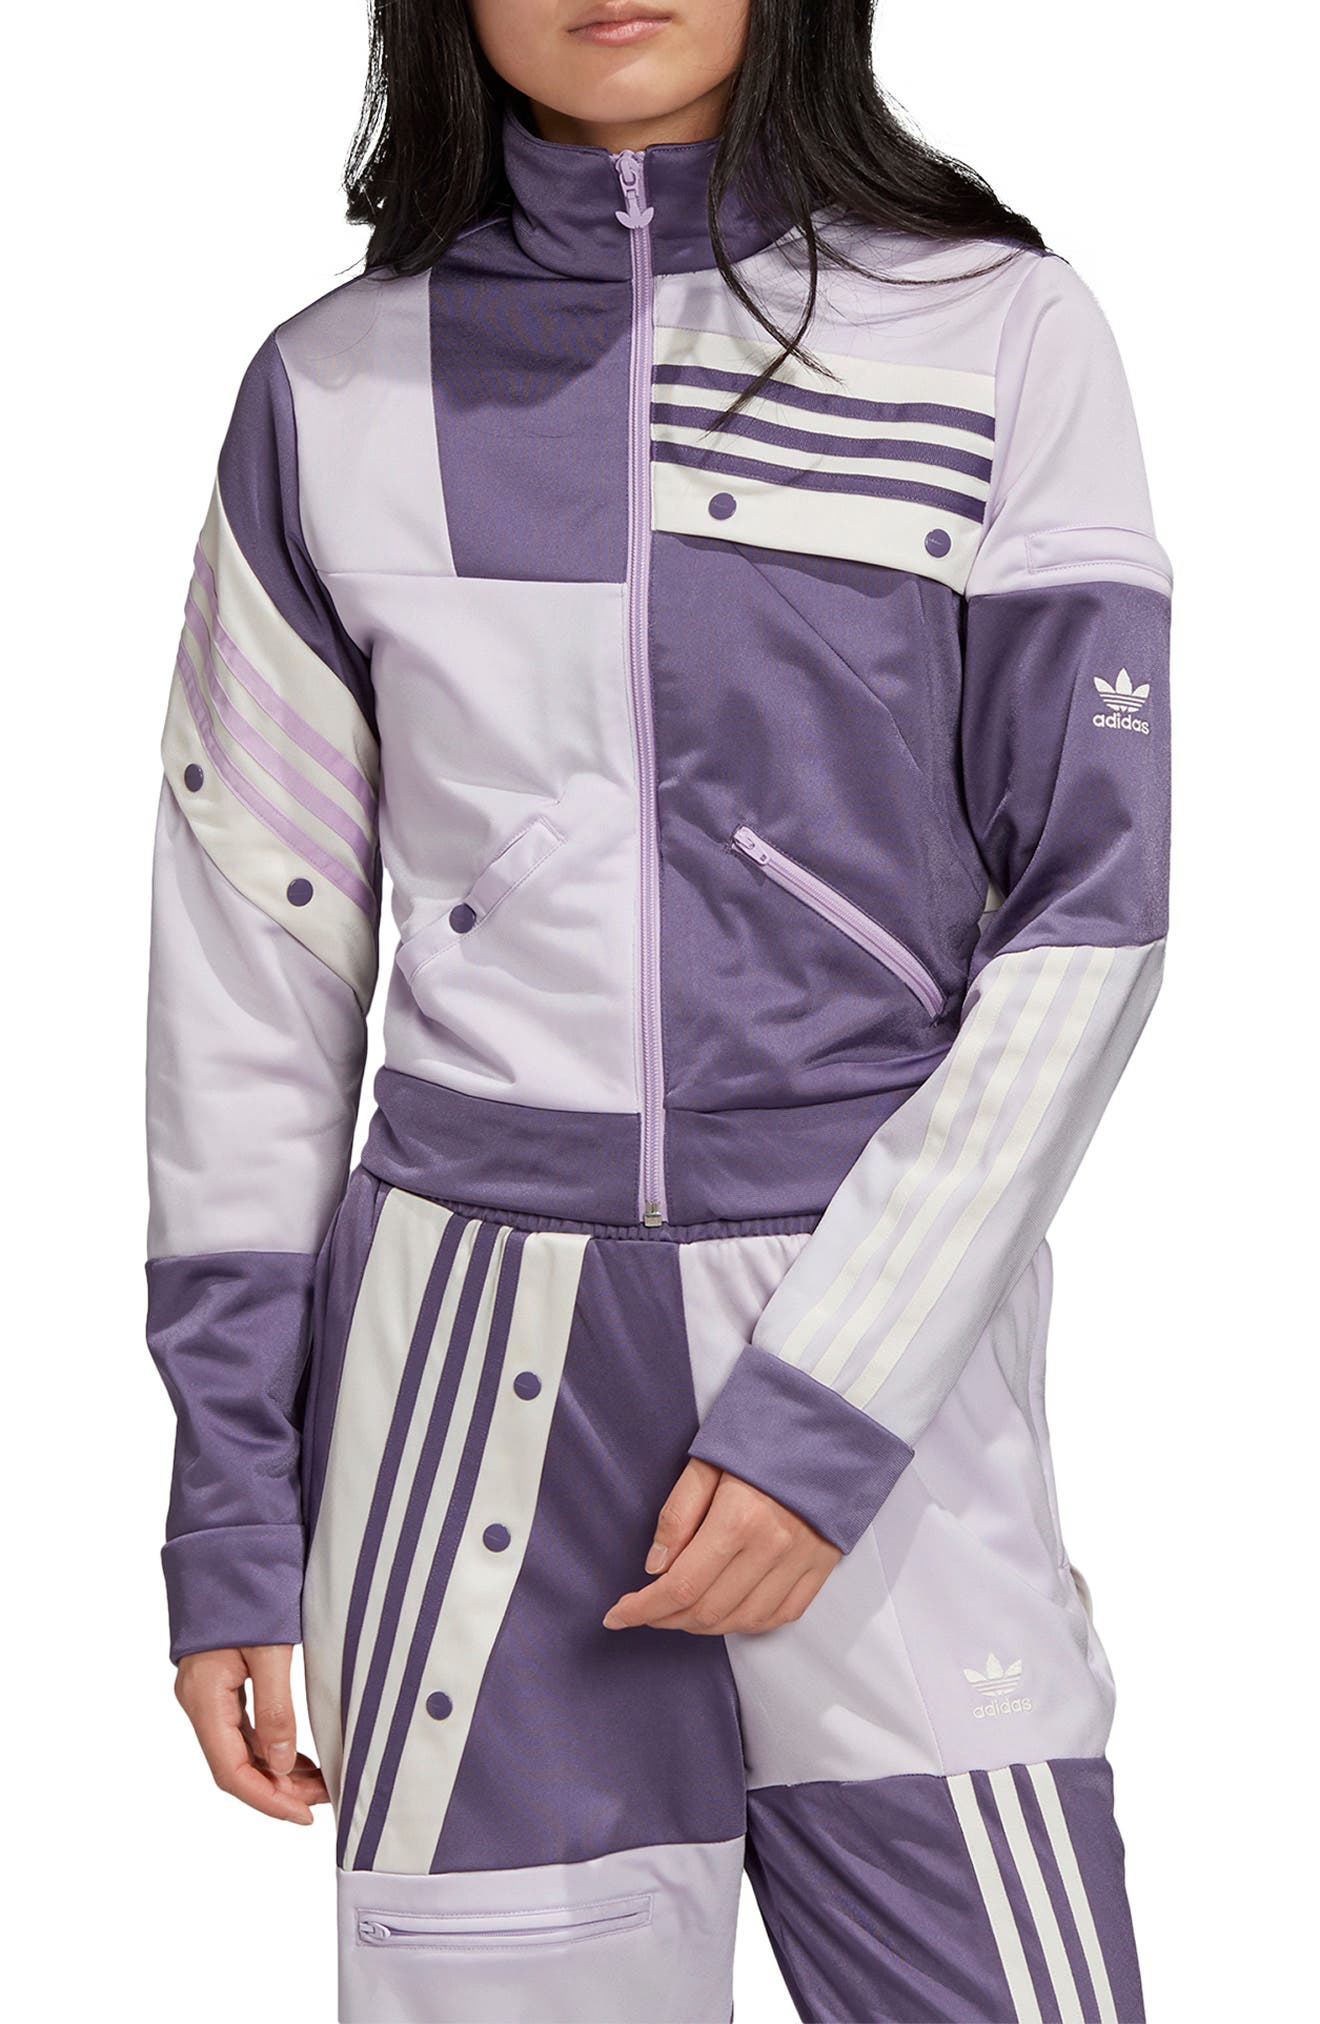 womens purple adidas jacket